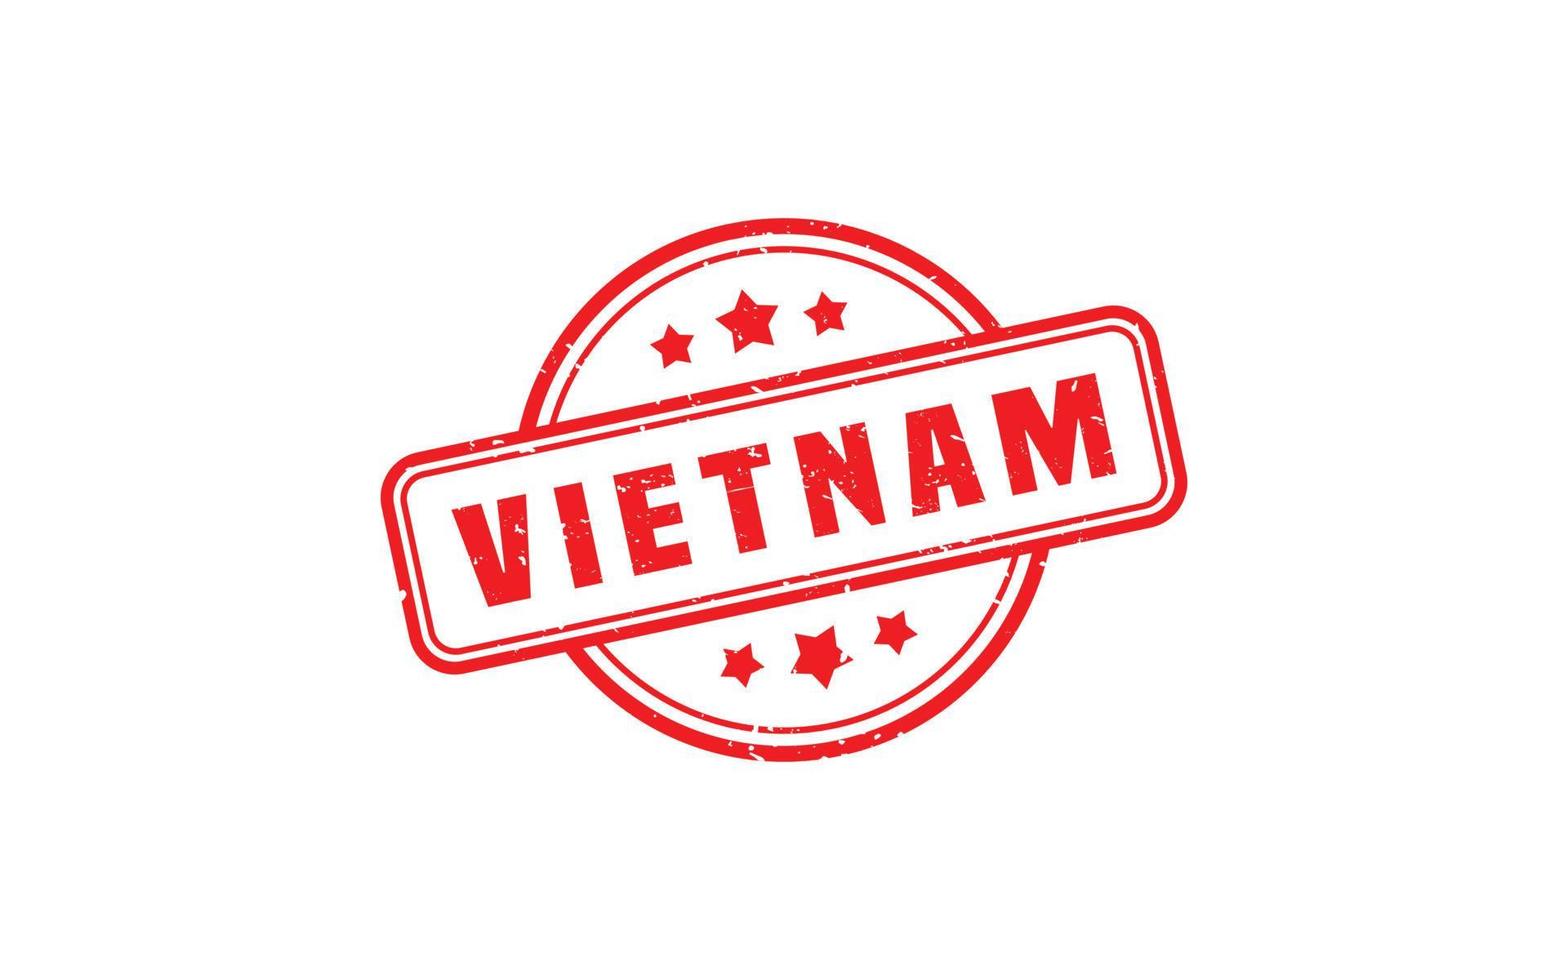 borracha de carimbo do vietnã com estilo grunge em fundo branco vetor